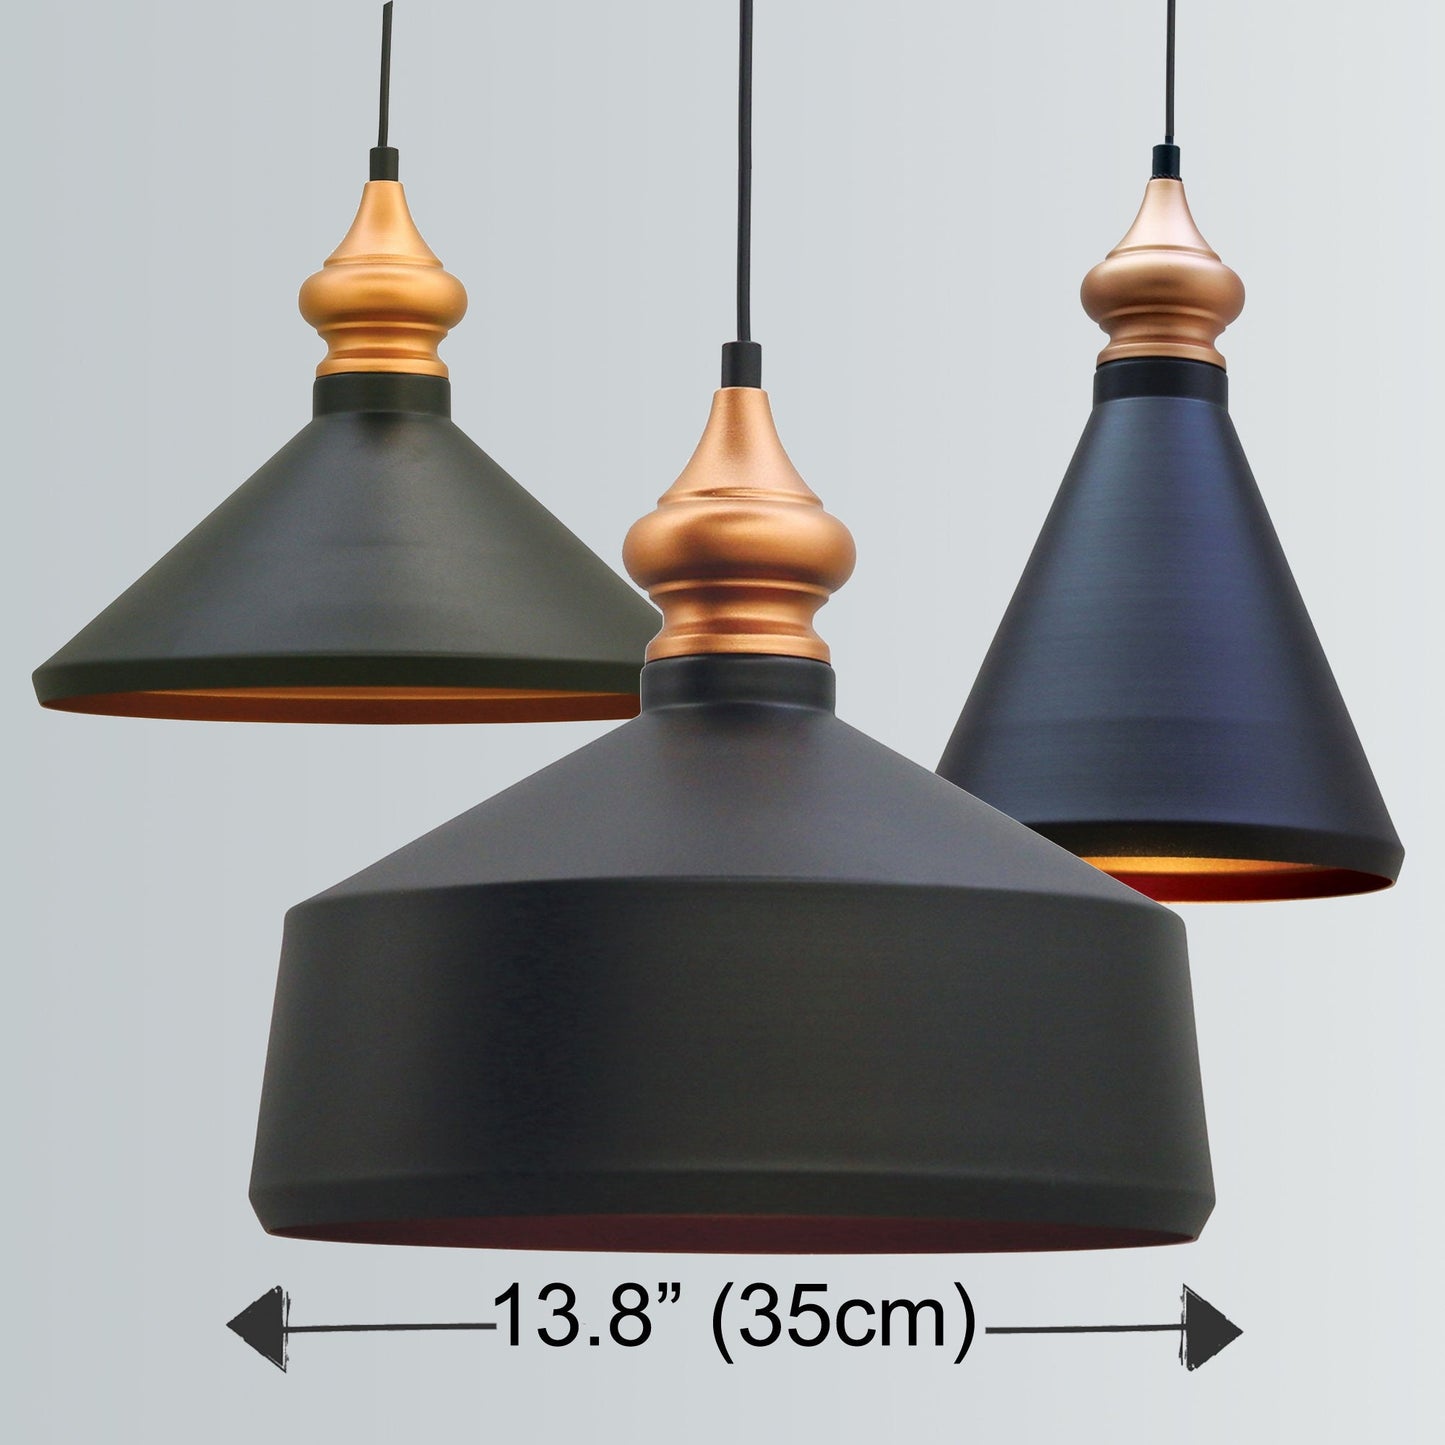 Authentic Light, Hanging Loft Lamp, Dome Light, Industrial Lighting, Pendant Light, Vintage Pendant Light, Hanging Home Lighting, Black